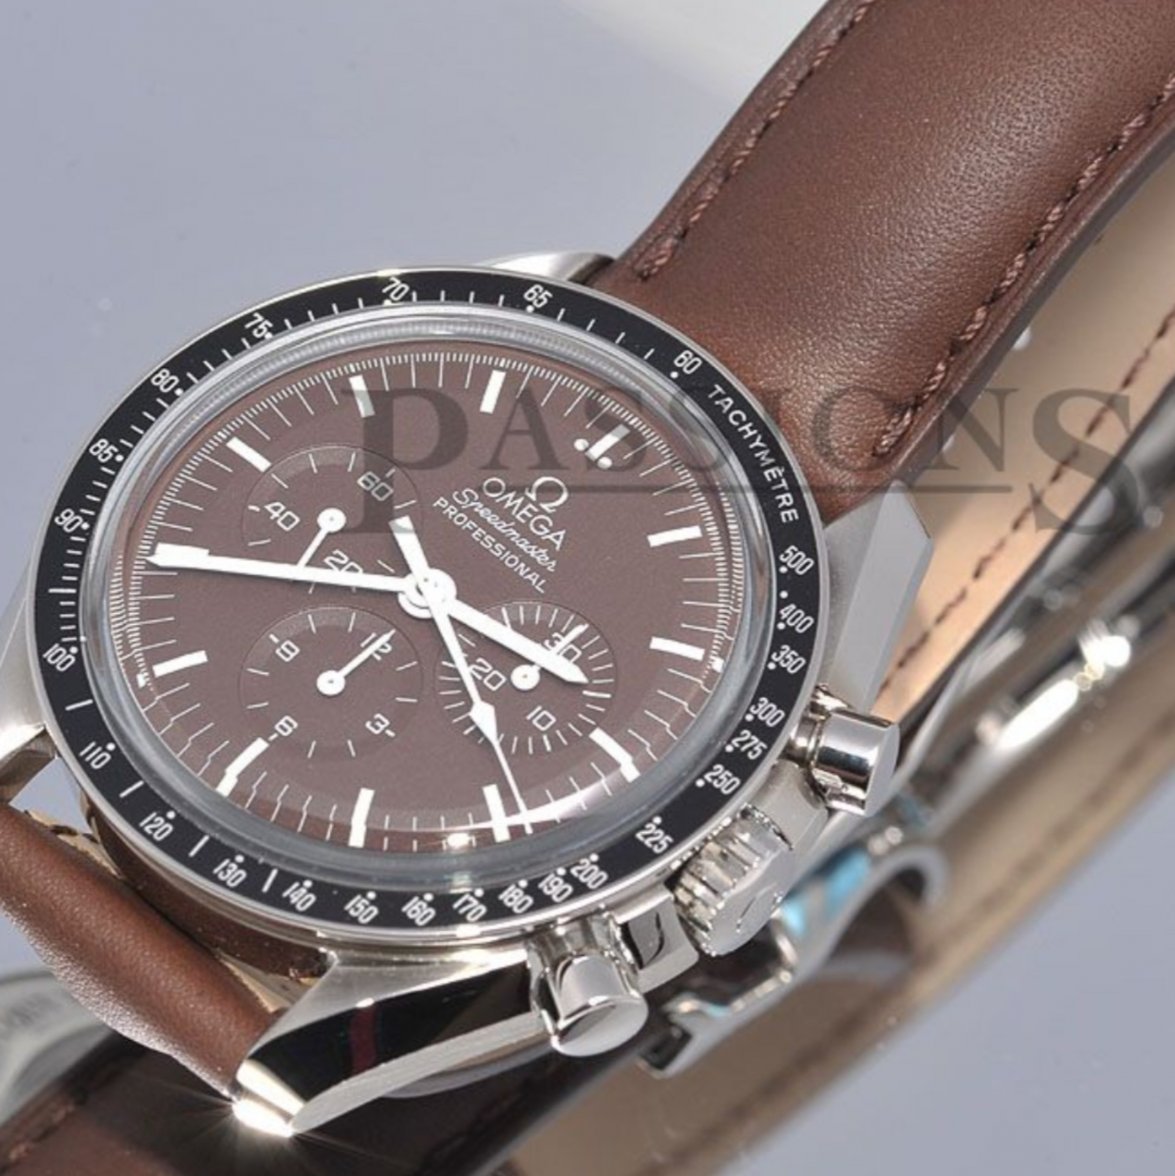 omega speedmaster professional brown dial